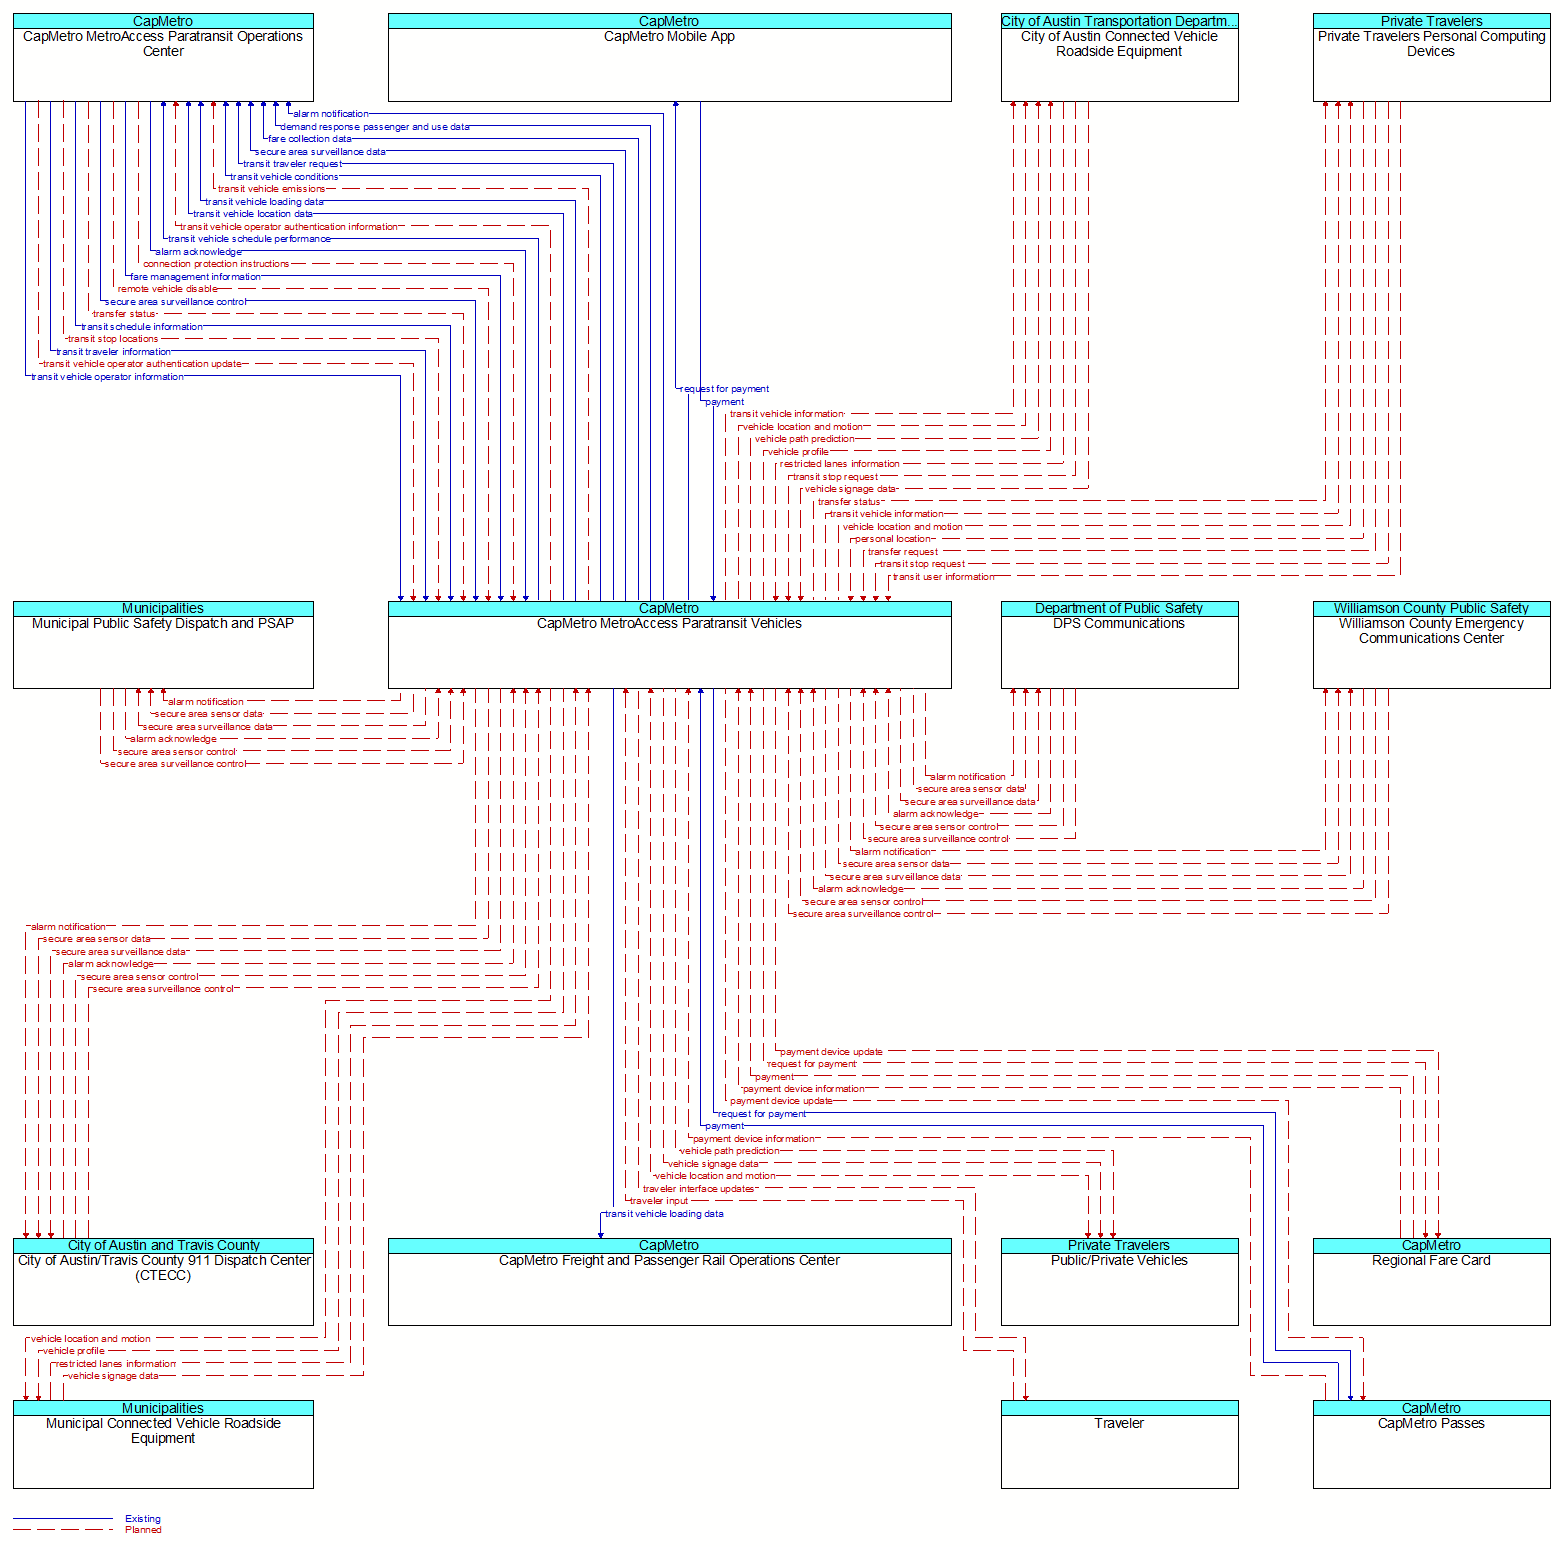 Context Diagram - CapMetro MetroAccess Paratransit Vehicles